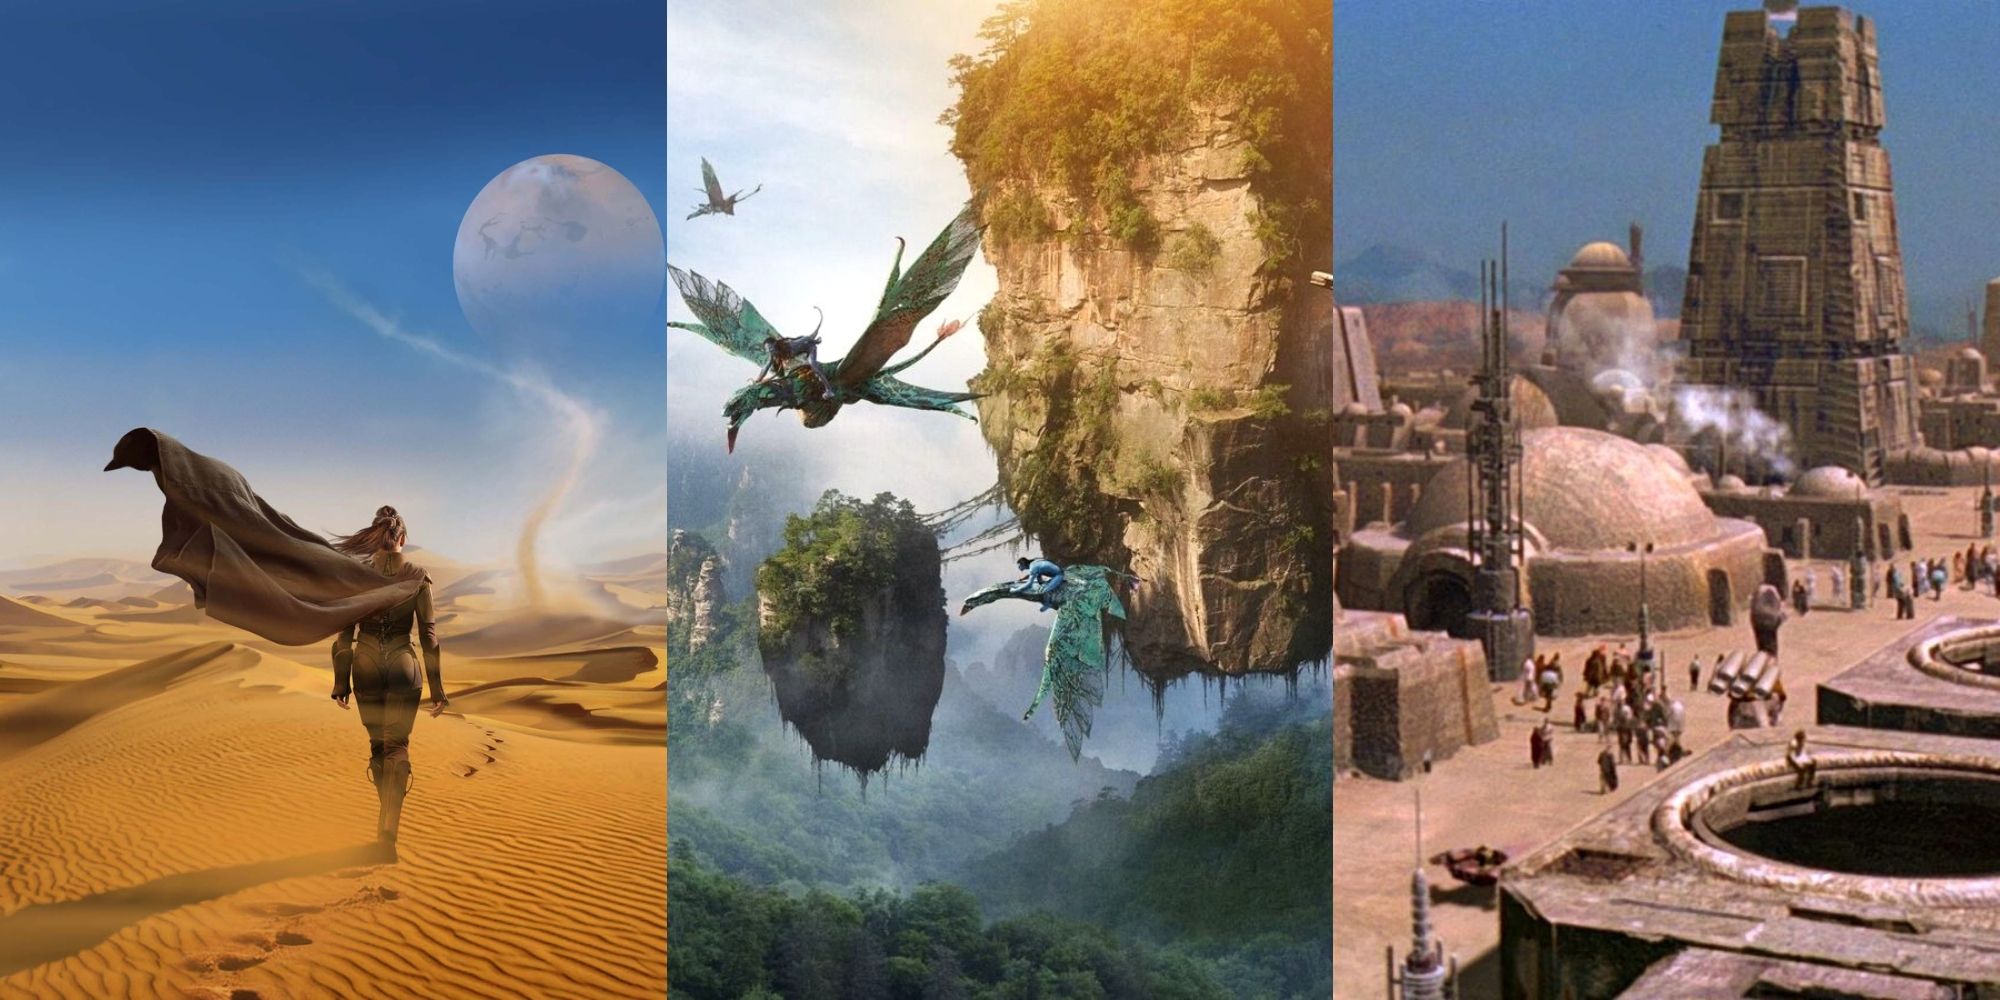 Arrakis in Dune, Pandora in Avatar, Tatooine in Star Wars